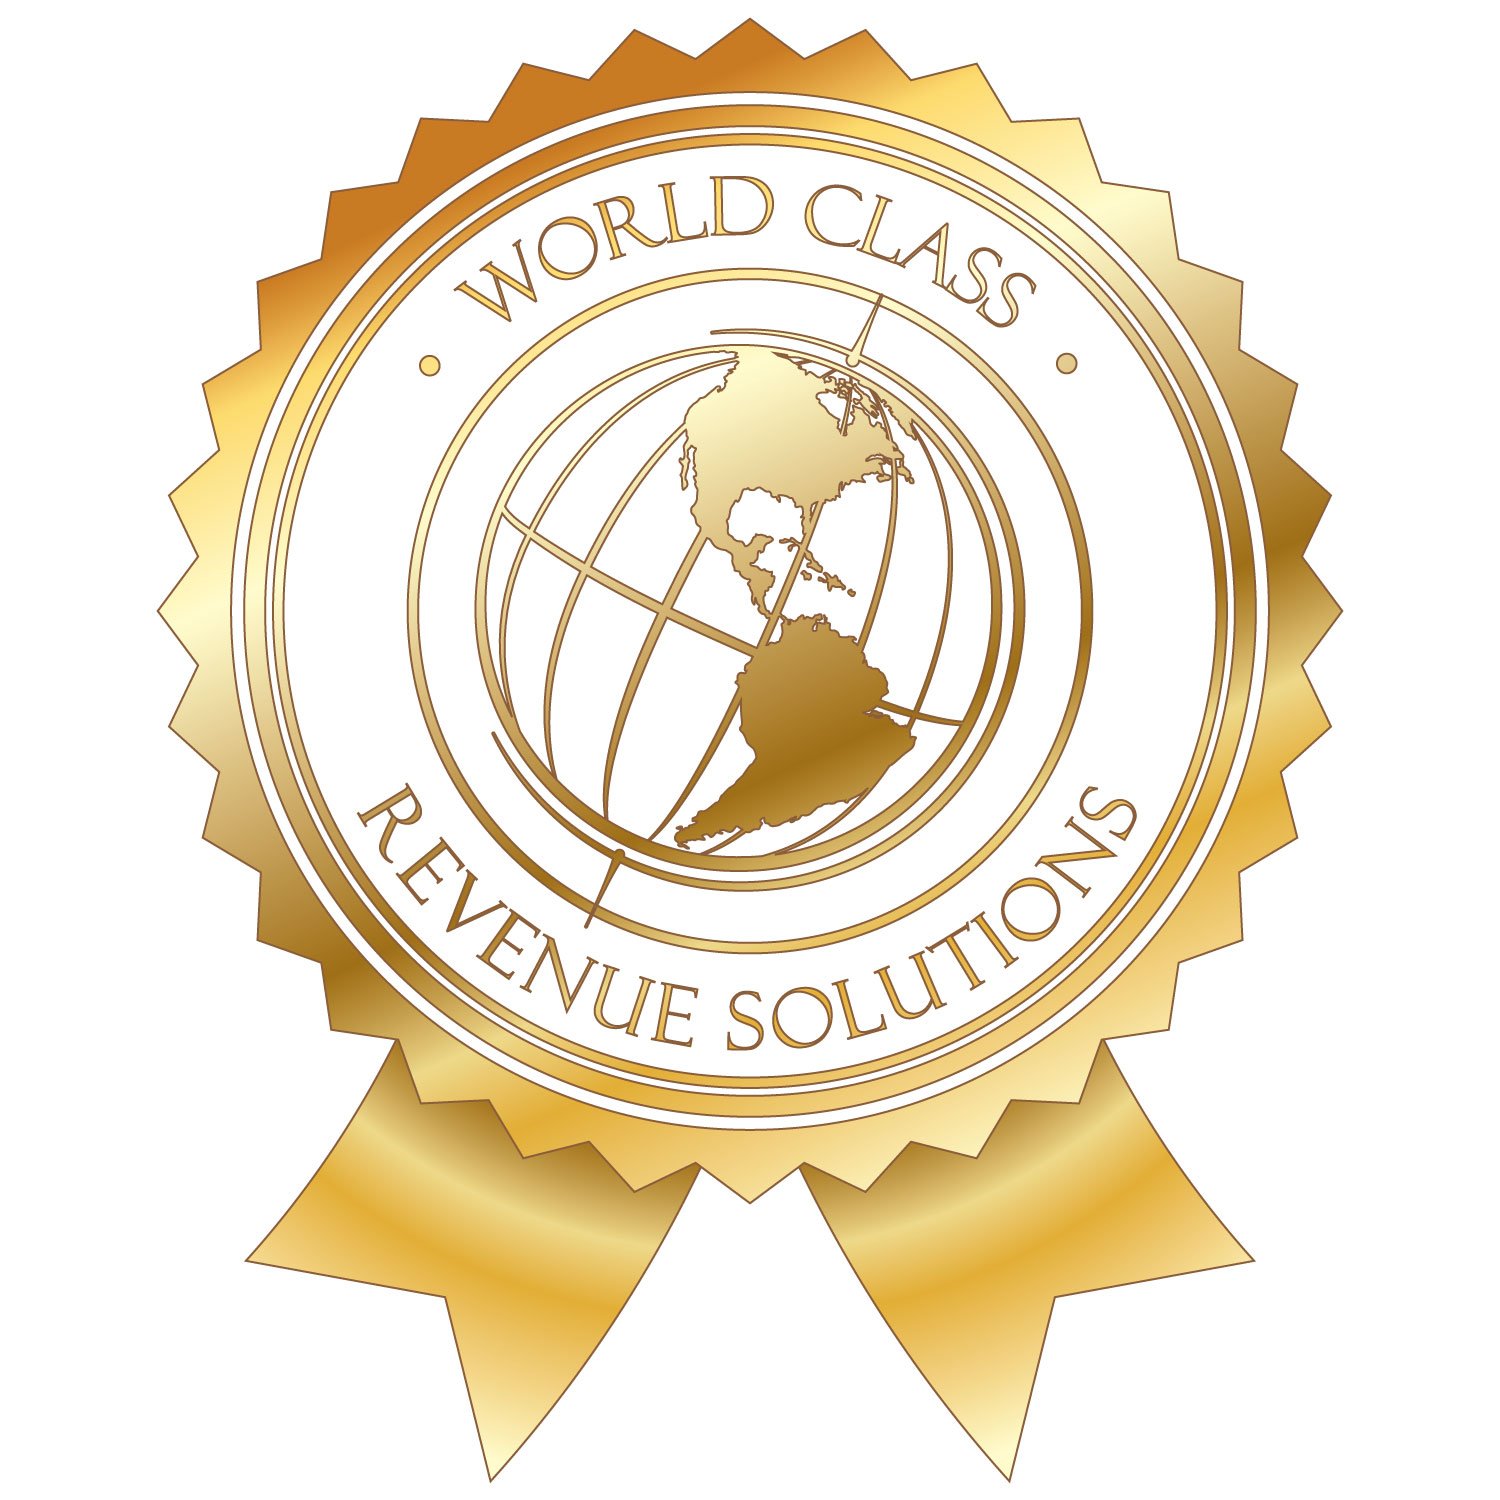 World Class Revenue Solutions